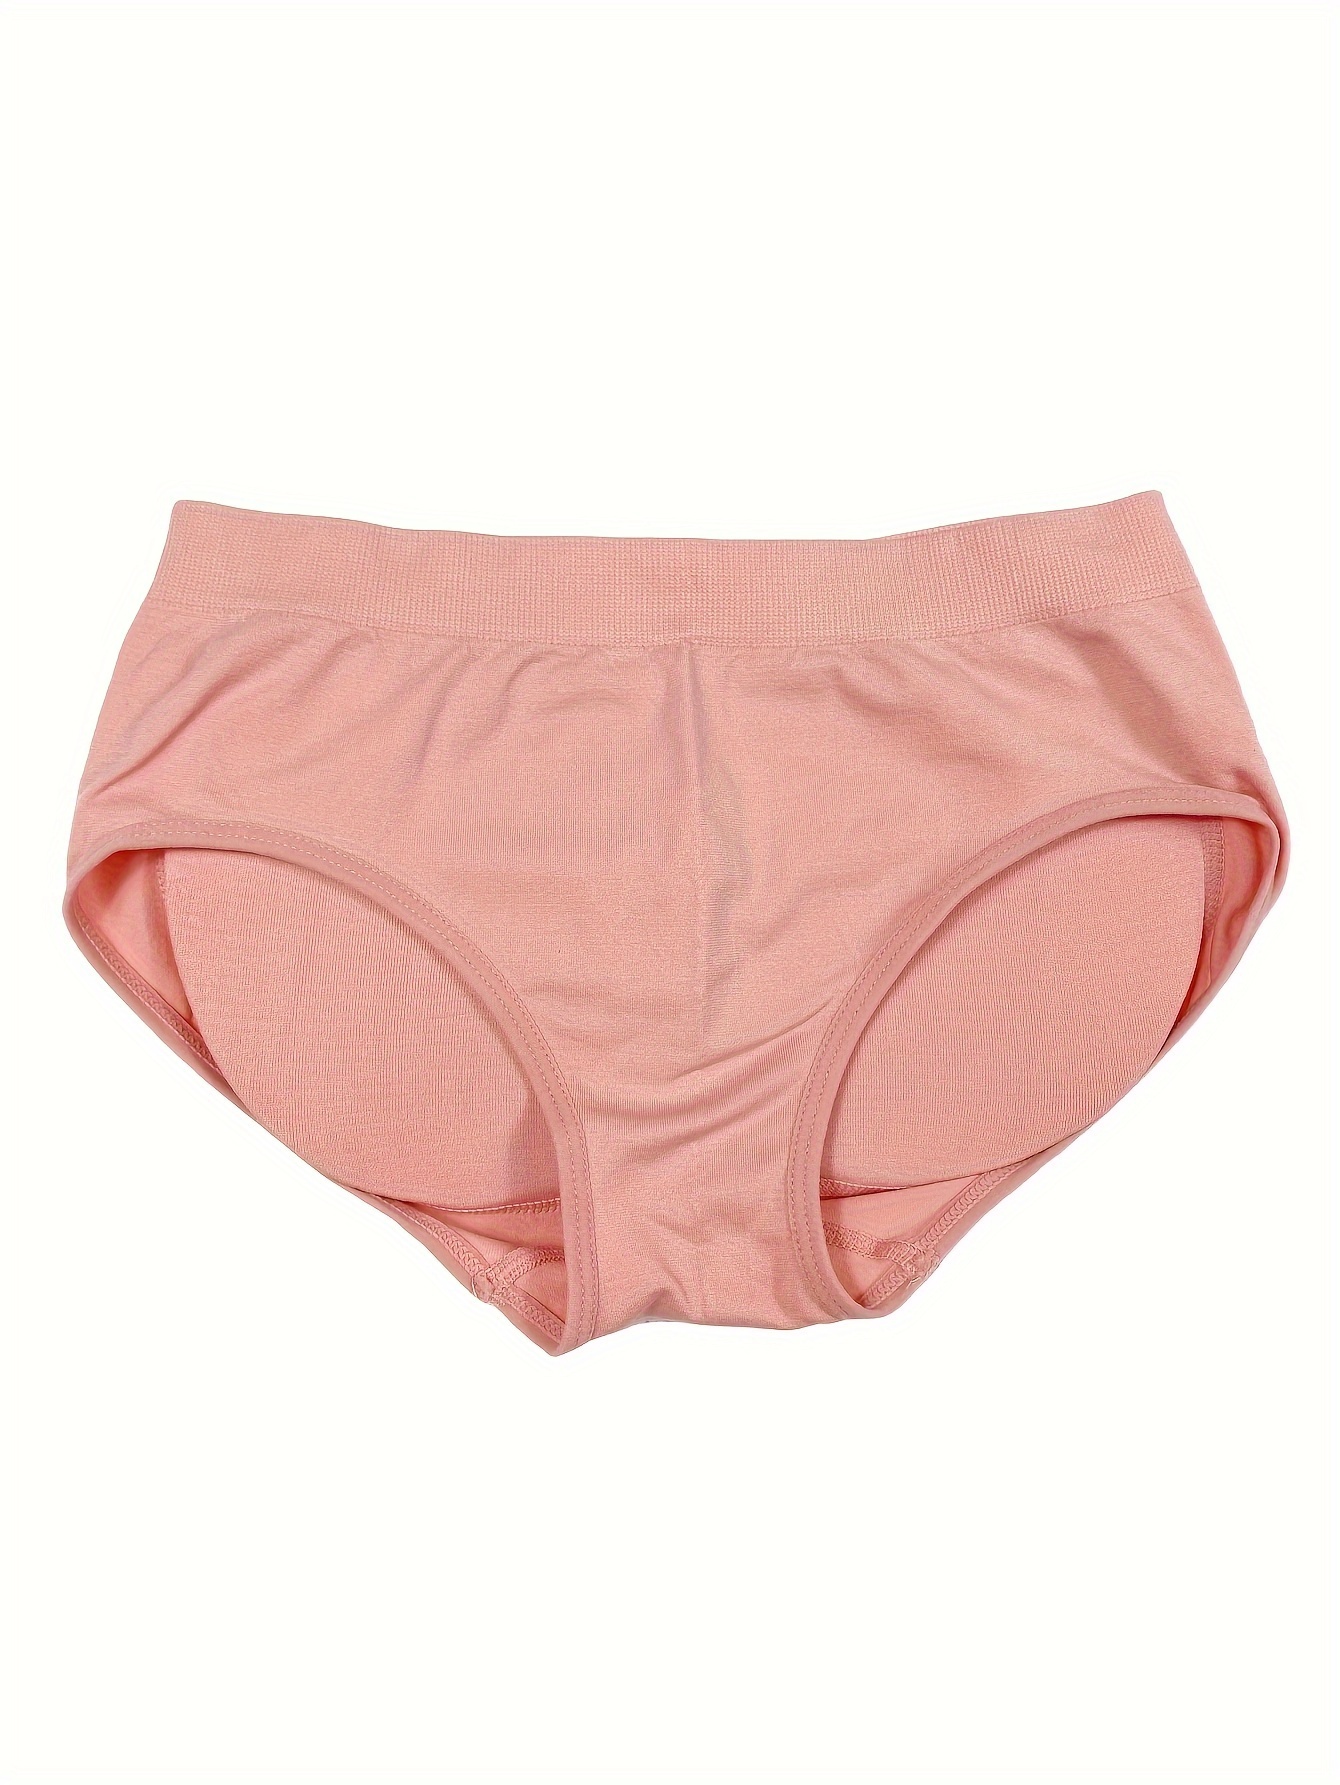 TOSOFT Thin Padded Underwear For Women Shapewear Control Panties